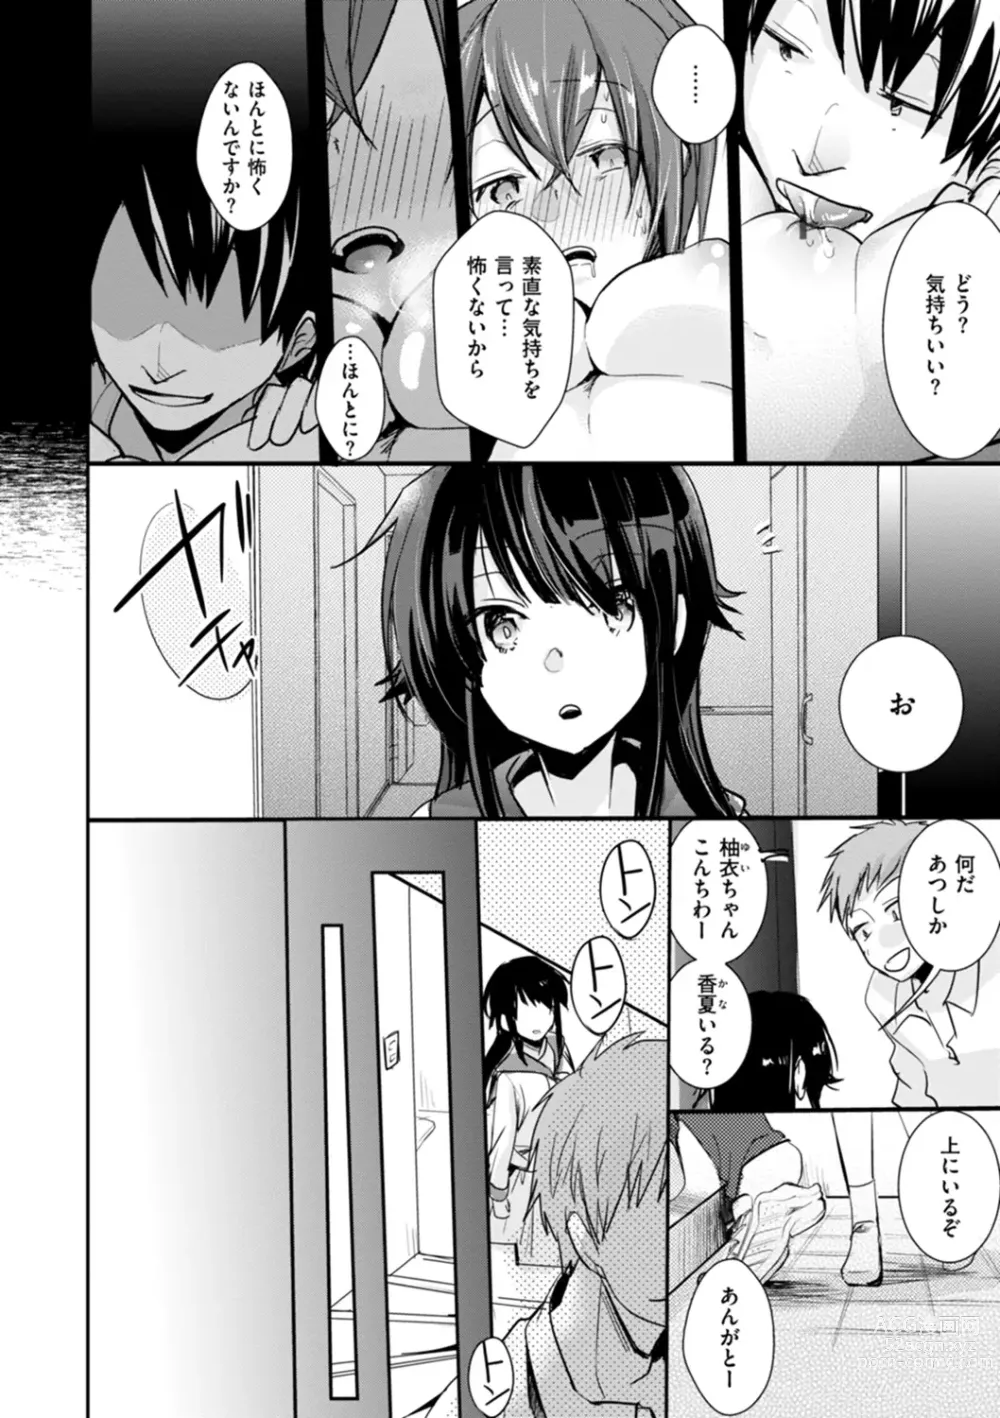 Page 12 of manga Kanojo no Jijou - Her Circumstances